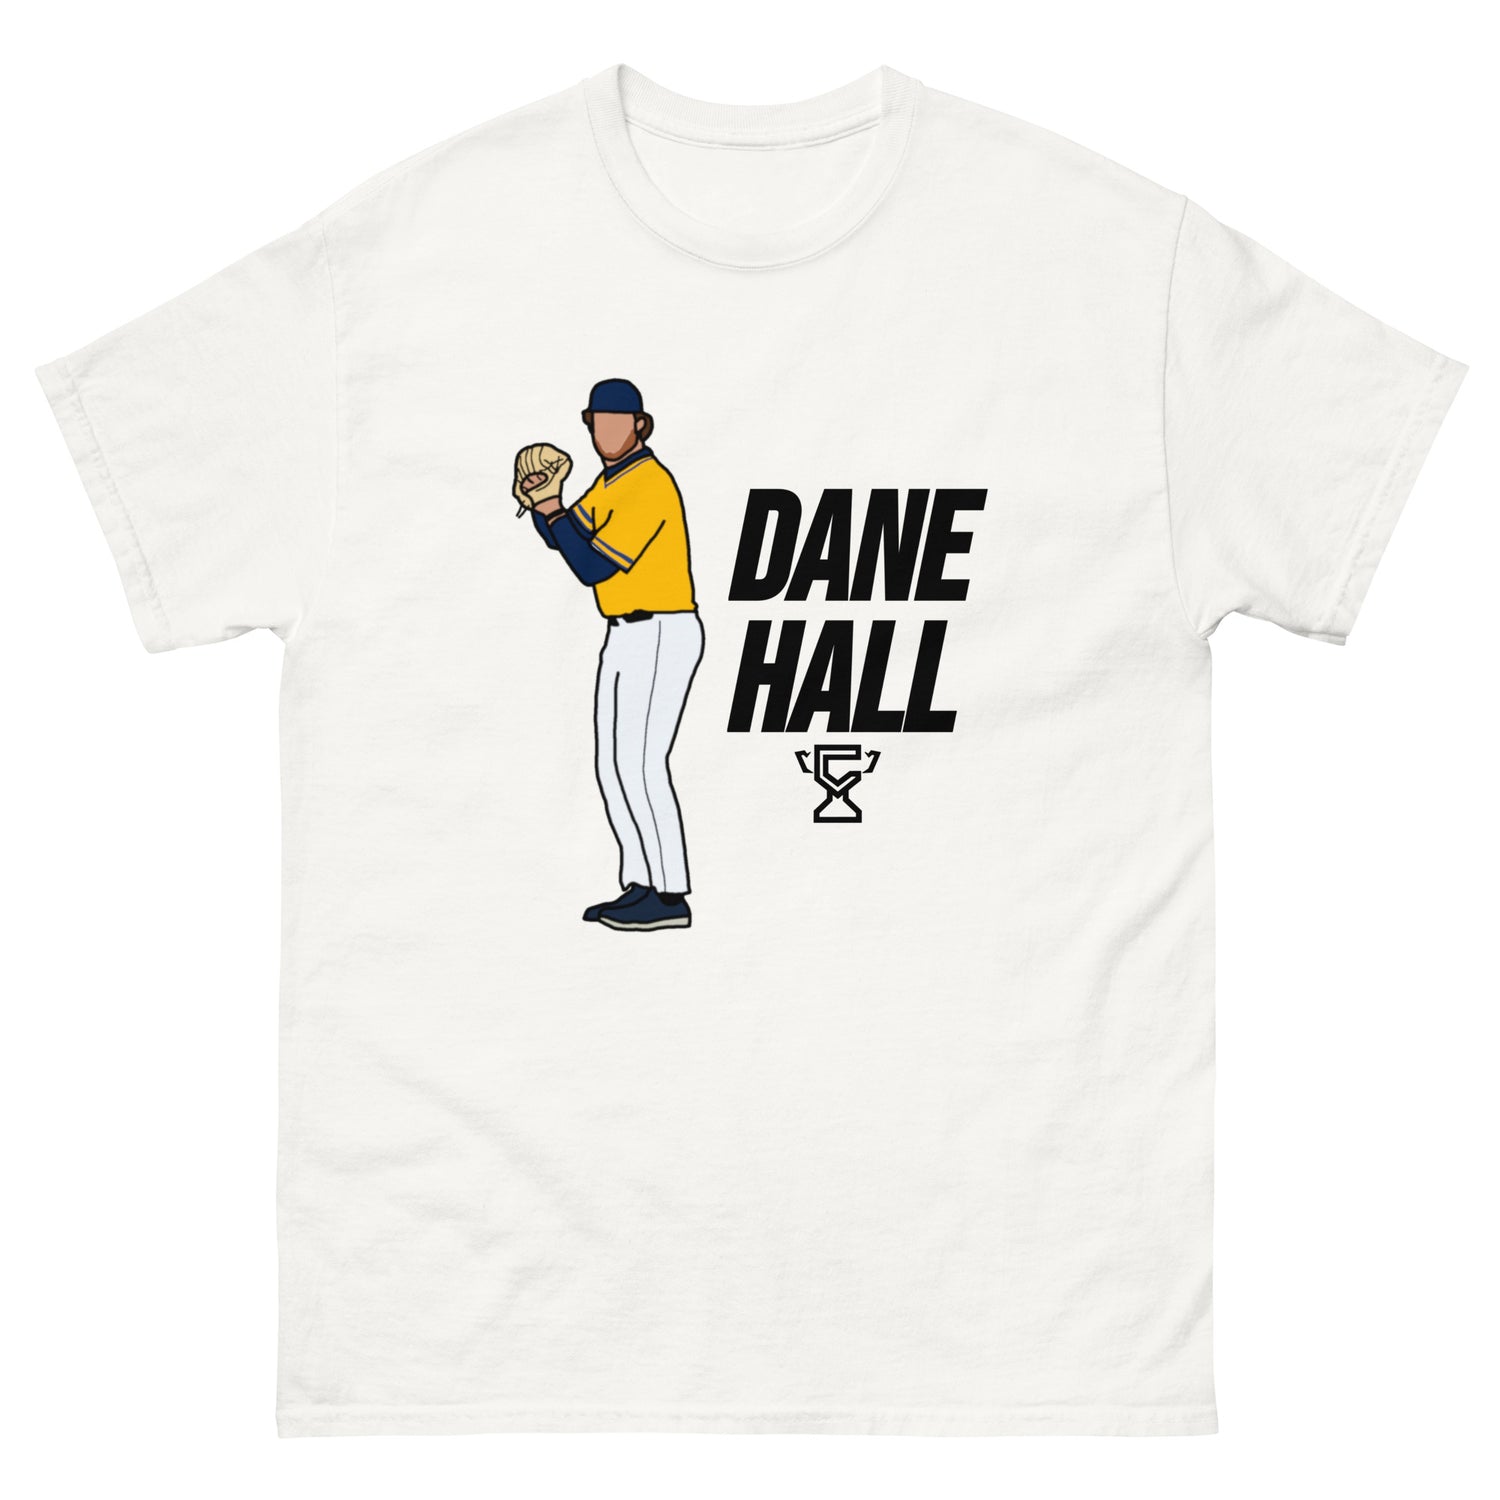 White t-shirt featuring art of Dane Hall.